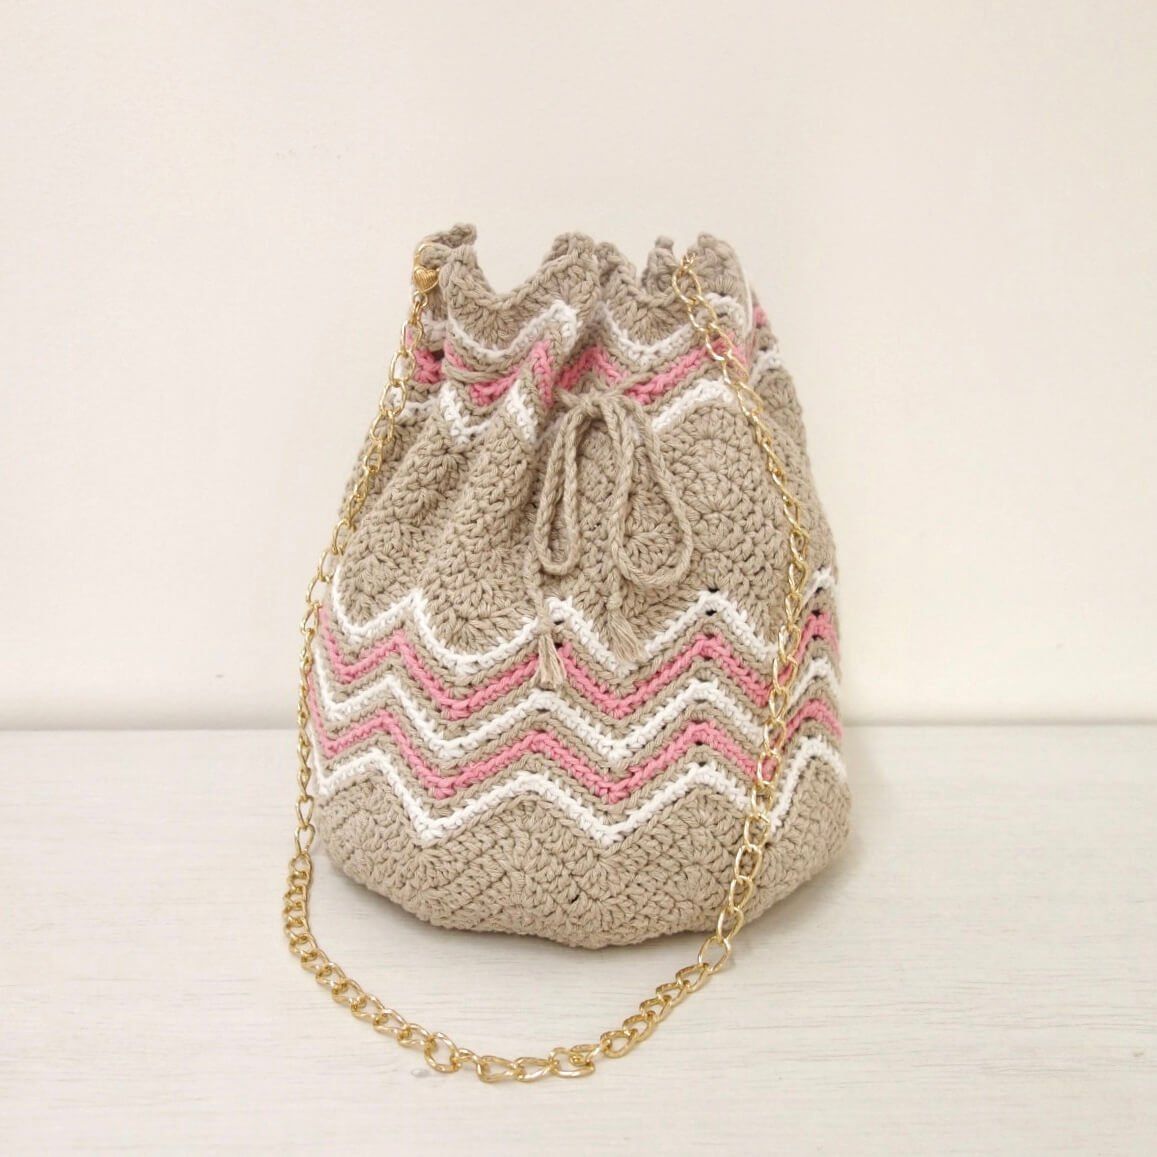 Crochet bag pattern - chevron stitch